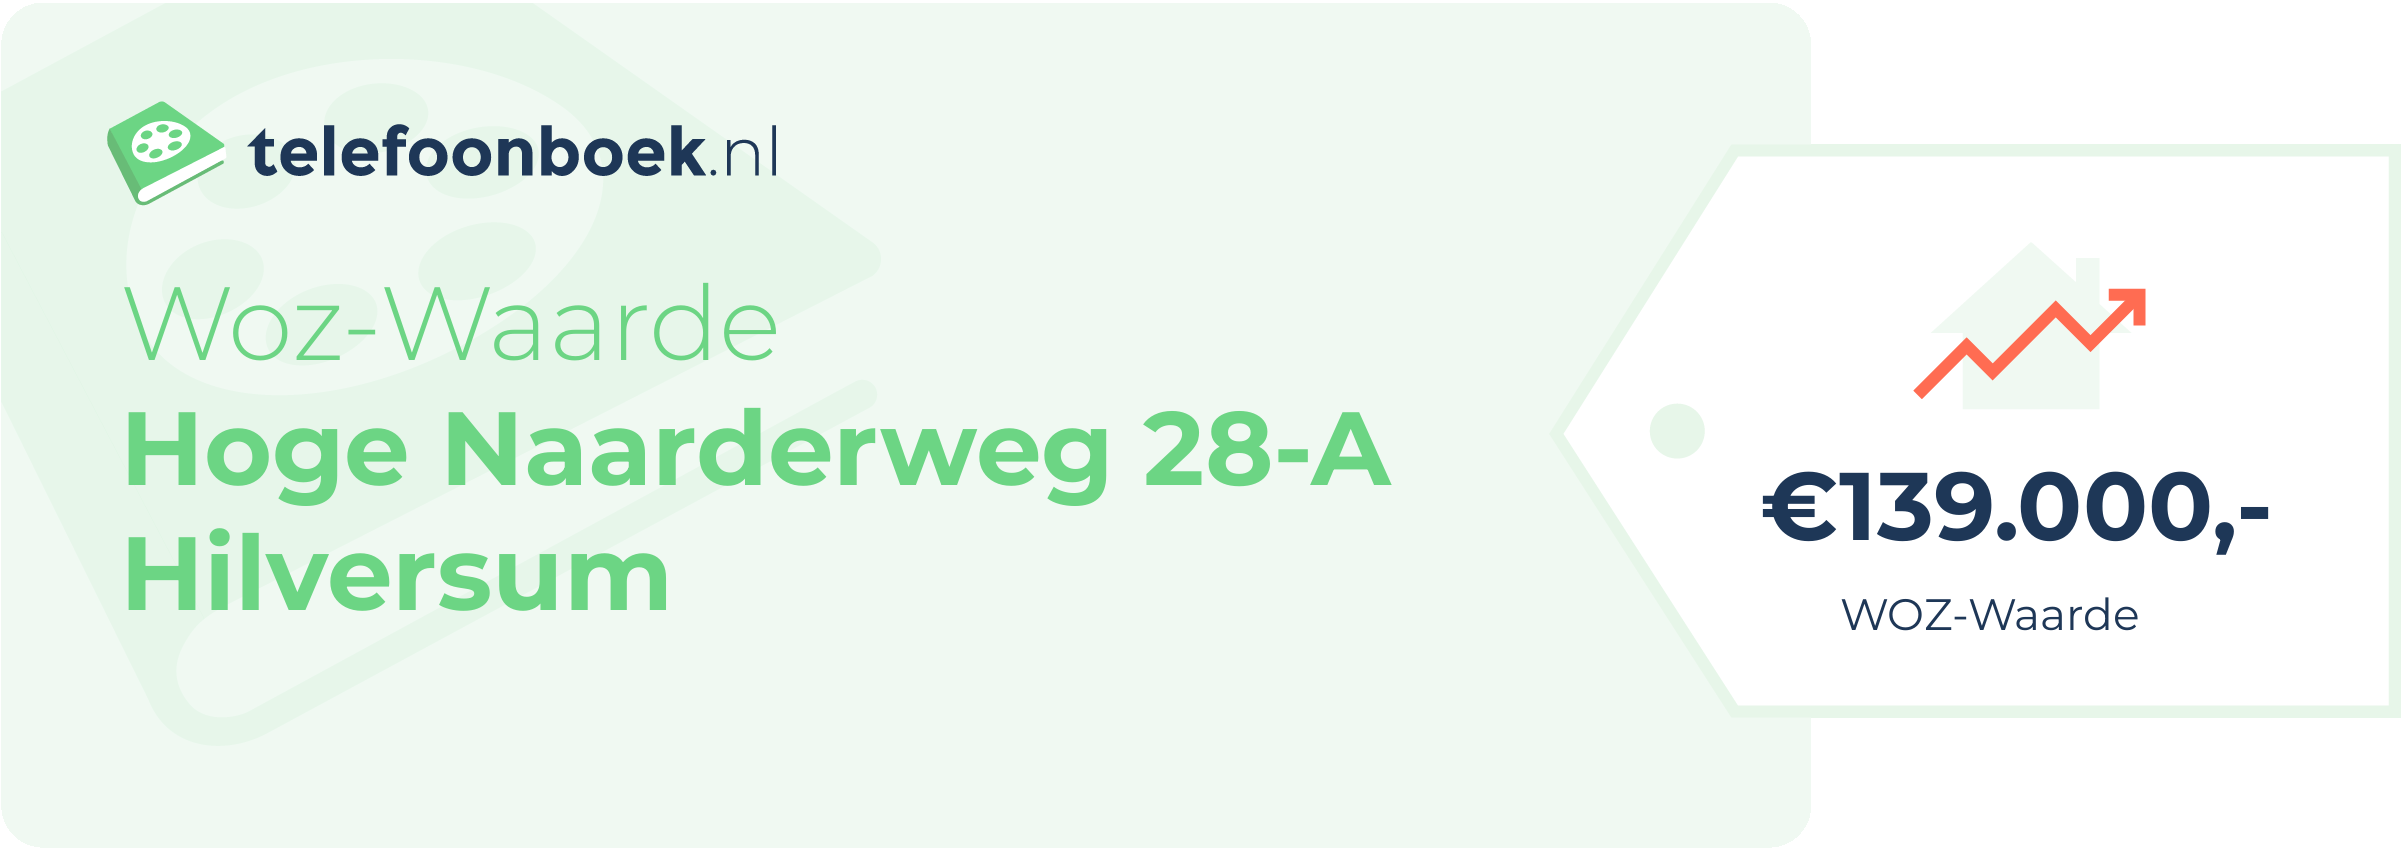 WOZ-waarde Hoge Naarderweg 28-A Hilversum